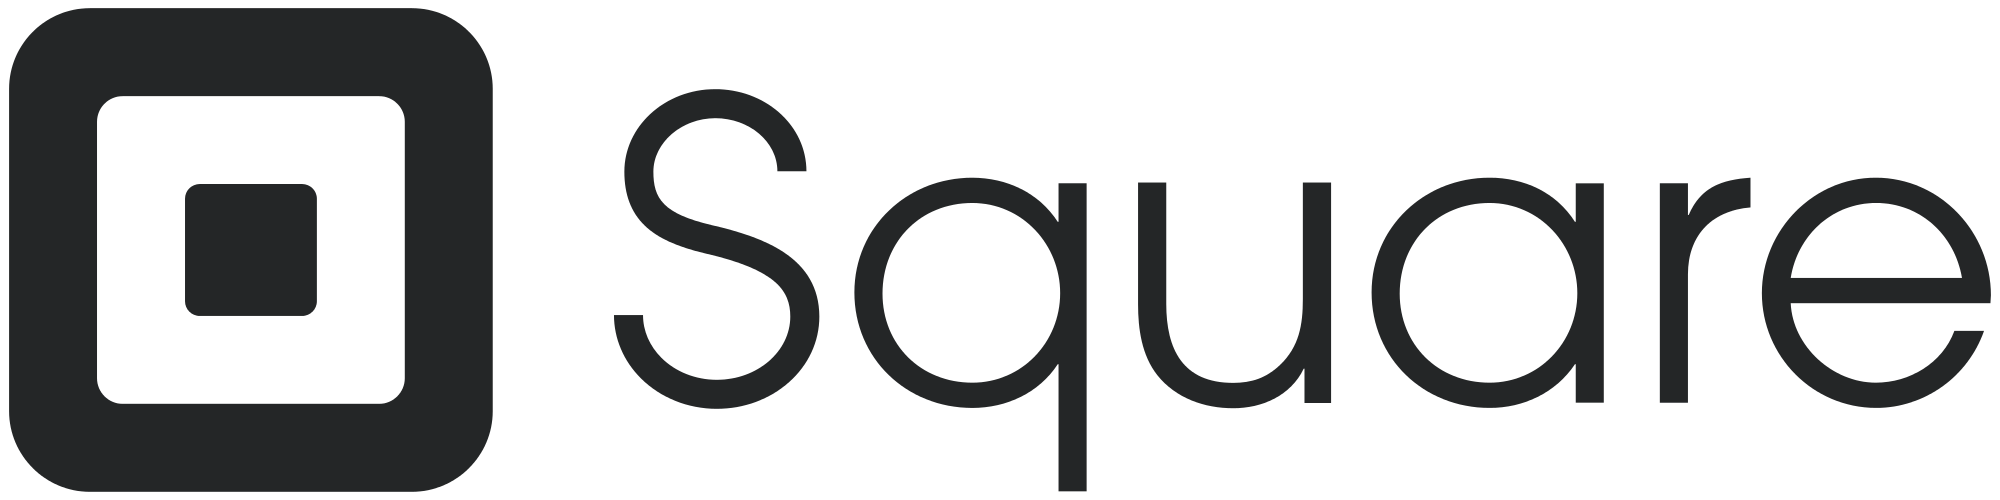 We Accept Cash App Logo - Square Inc.(NYSE:SQ): Square Inc (SQ) Hints at Savings, Investments ...